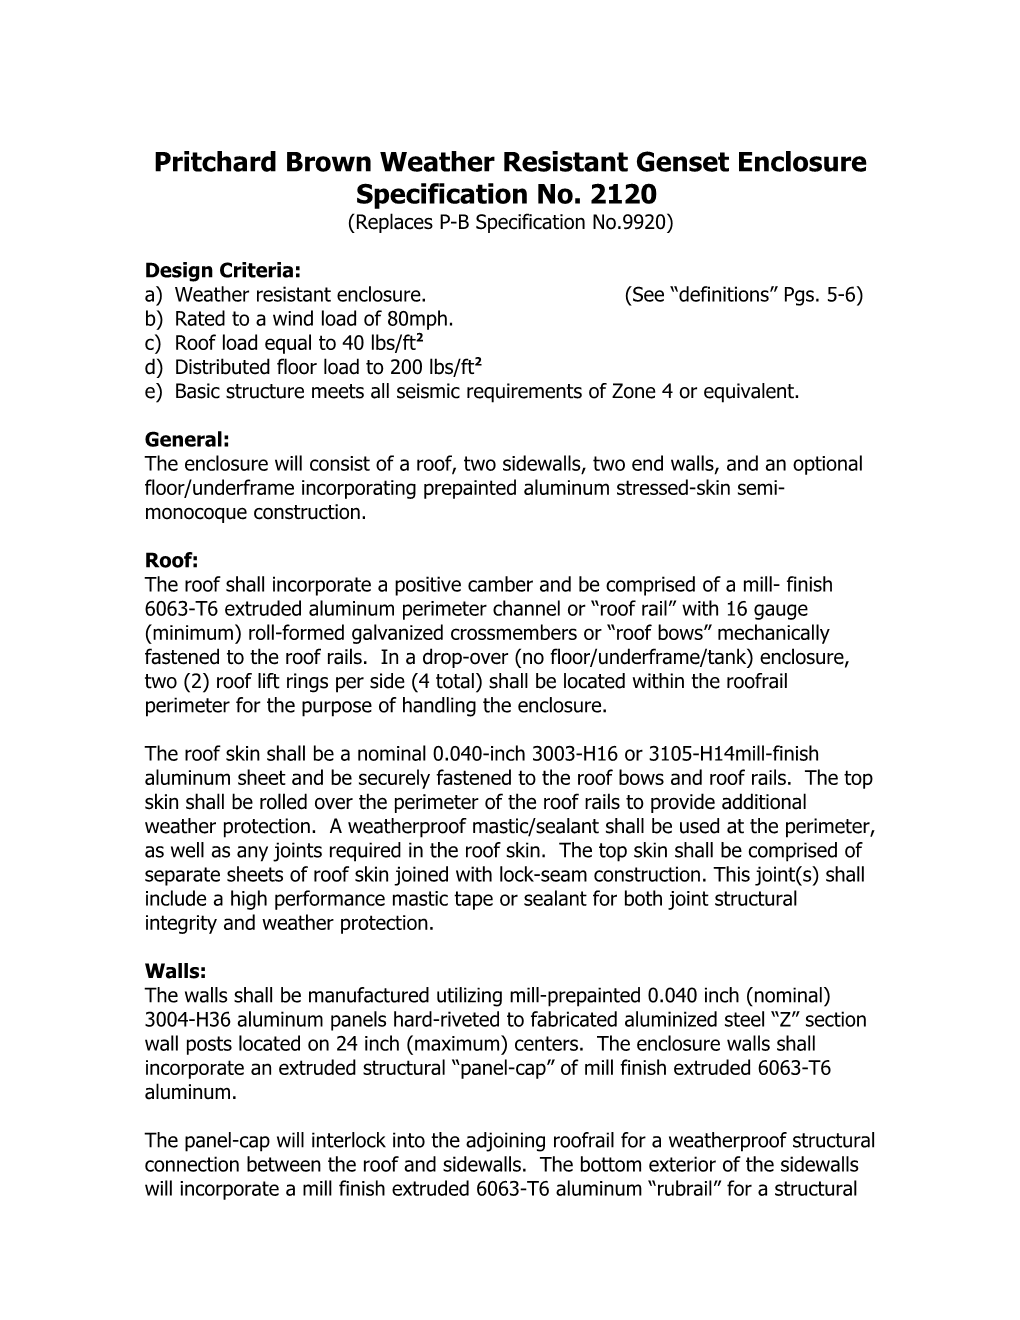 Pritchard Brown Weather Resistant Genset Enclosure Specification No. 2120